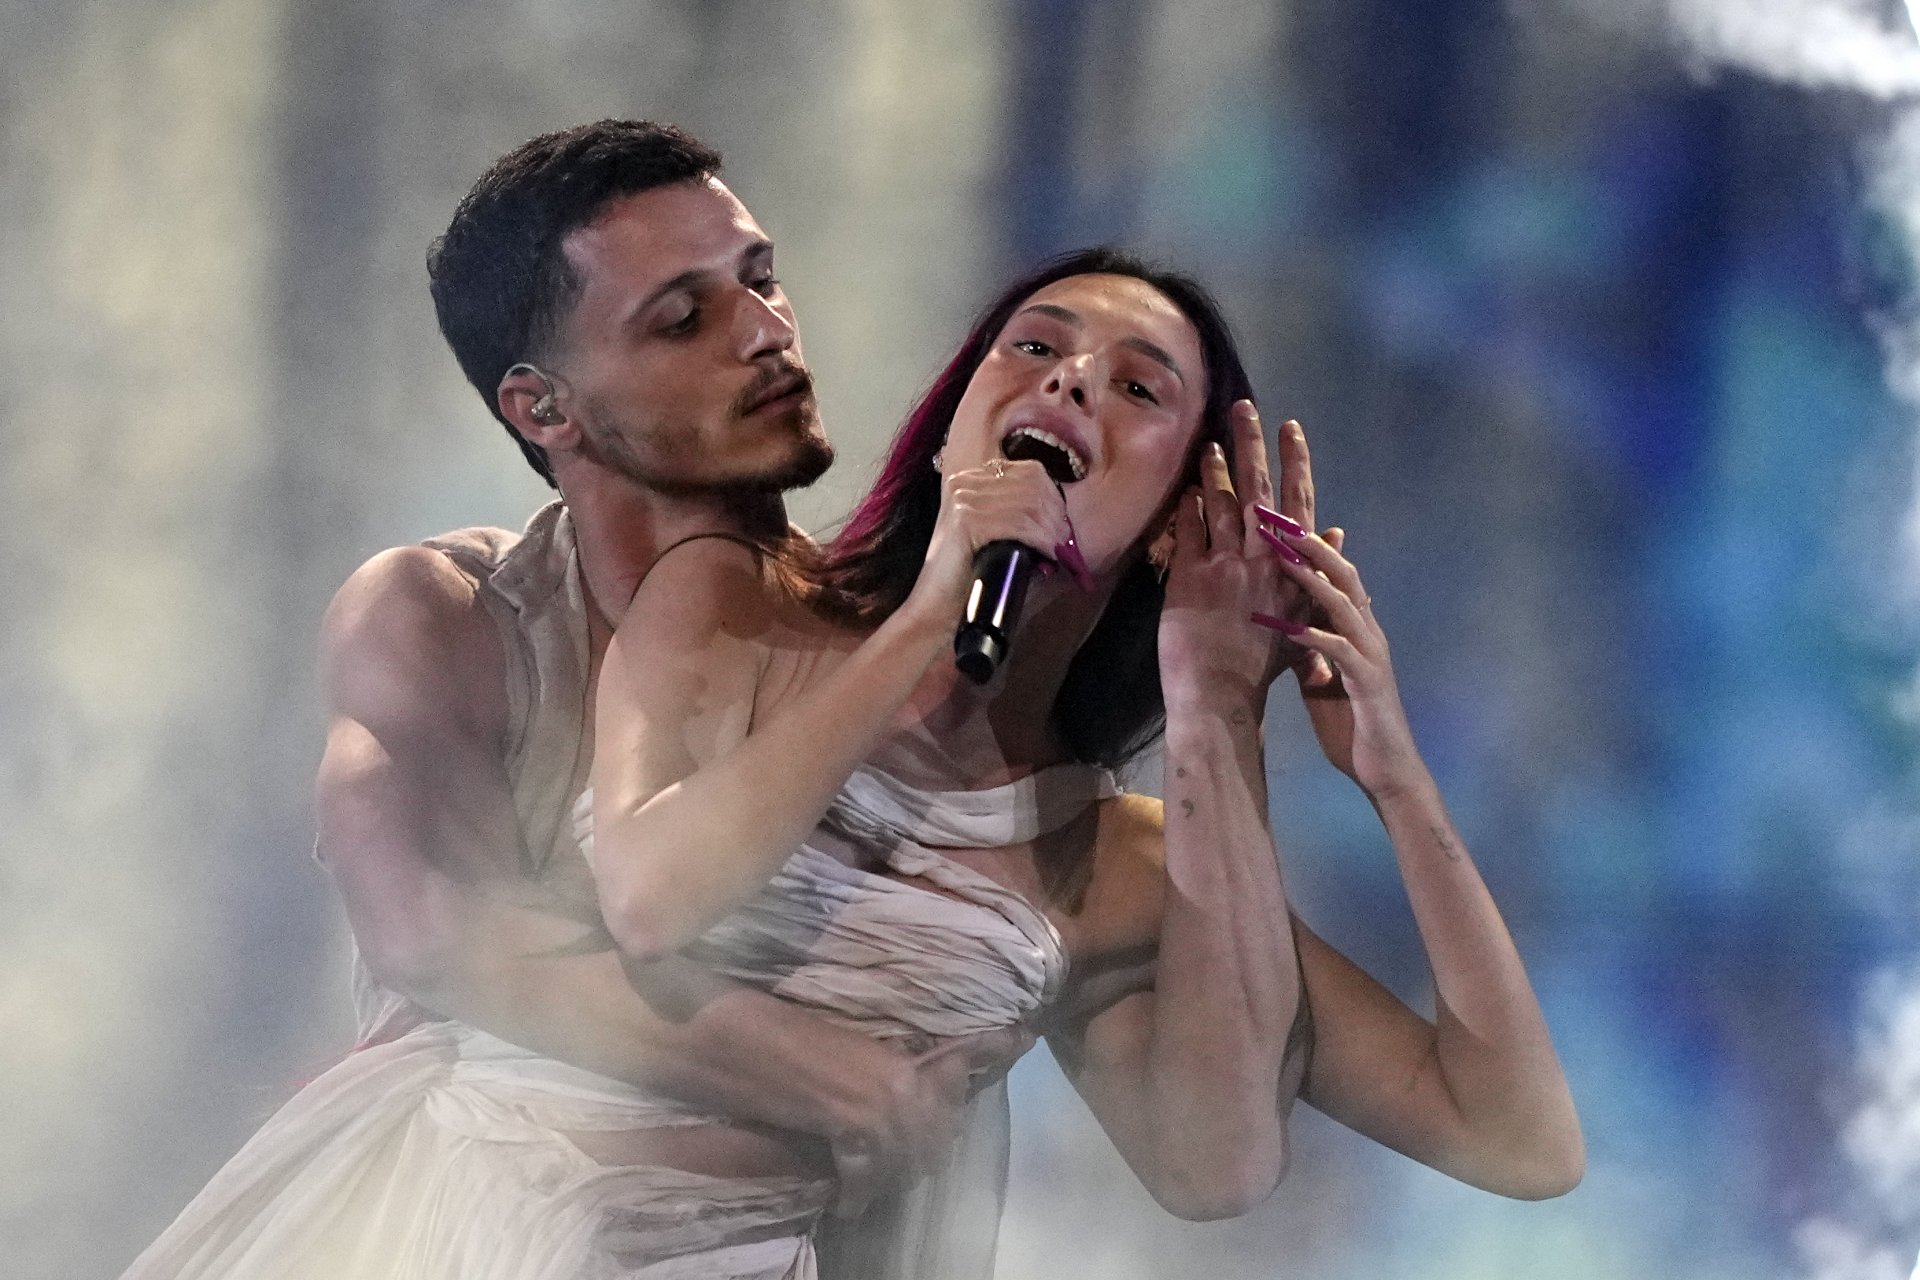 Den israelske Eurovision-deltakeren Eden Golan fremfører sangen hennes "Orkan" på generalprøven til finalen i sangkonkurransen